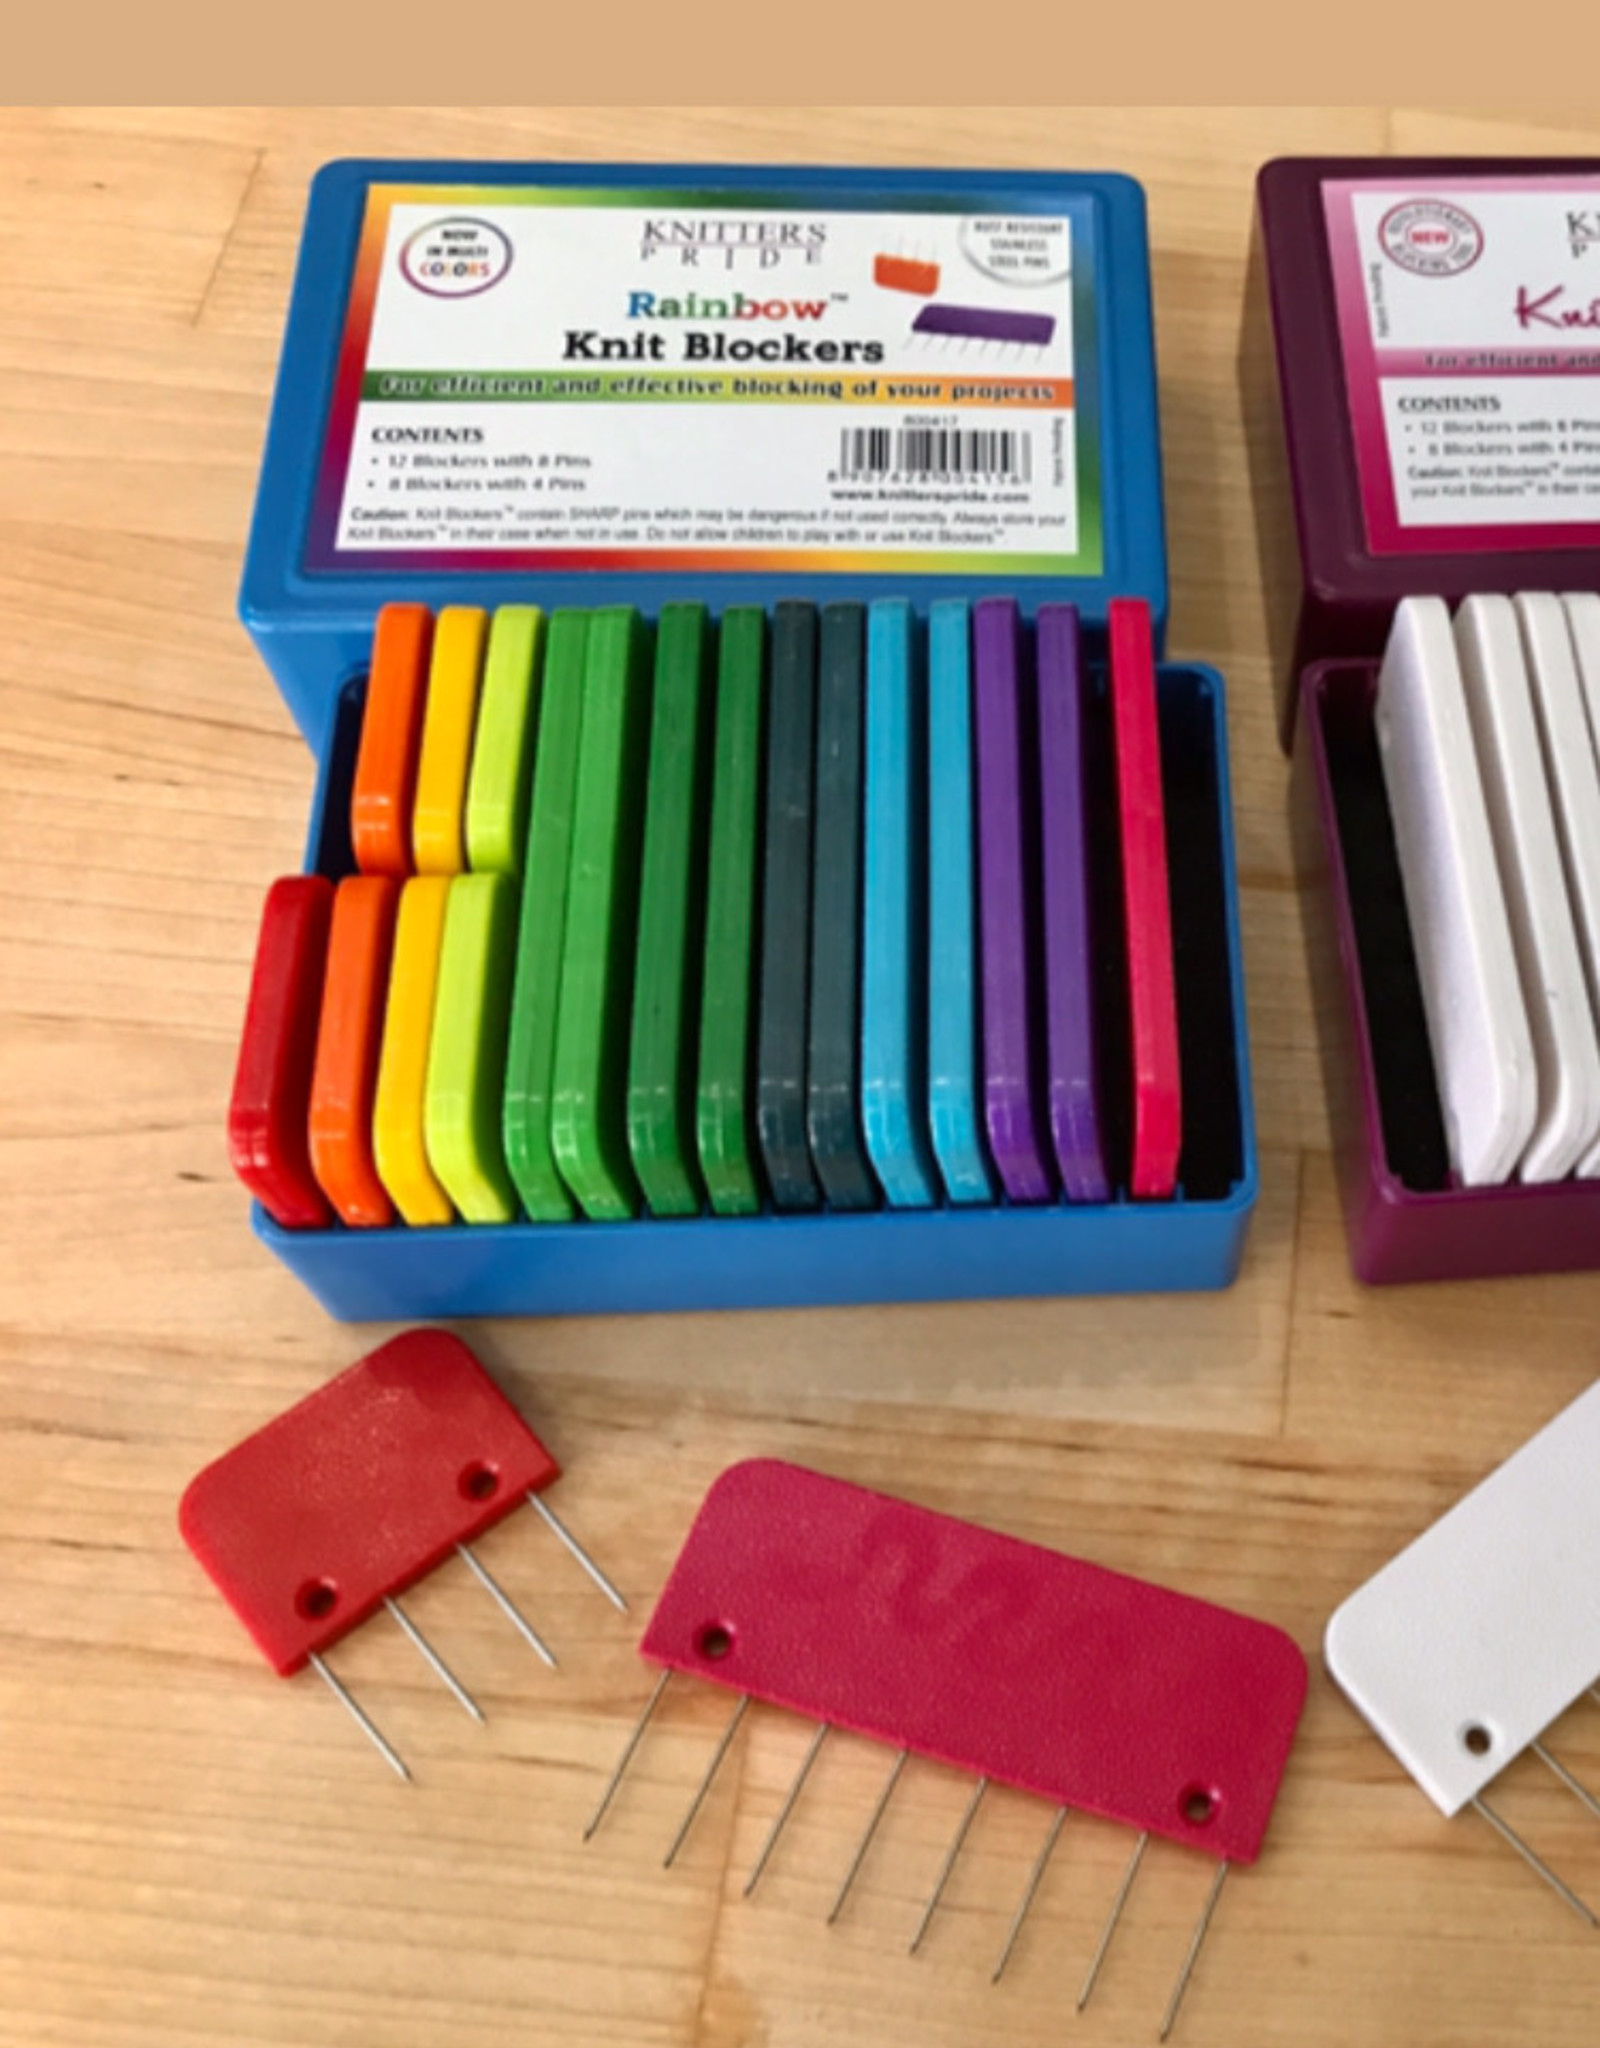 Knitters Pride Knitter's Pride Rainbow Knit Blockers